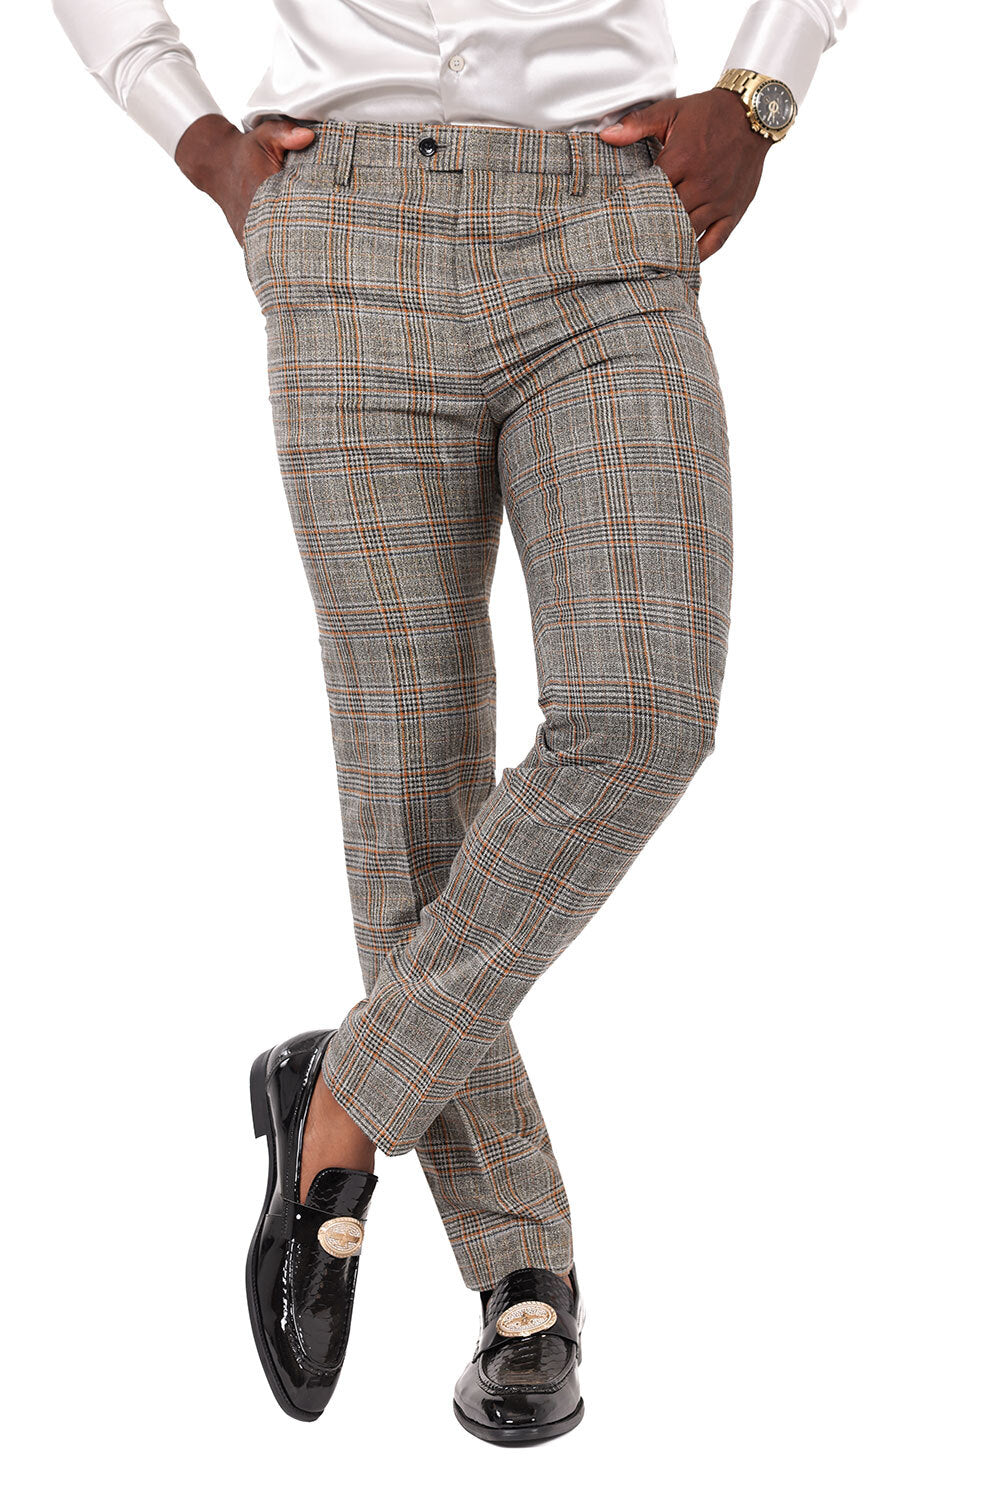 Barabas Men's Printed Checkered Plaid Design Chino Pants 2CP188 Mocha Gold